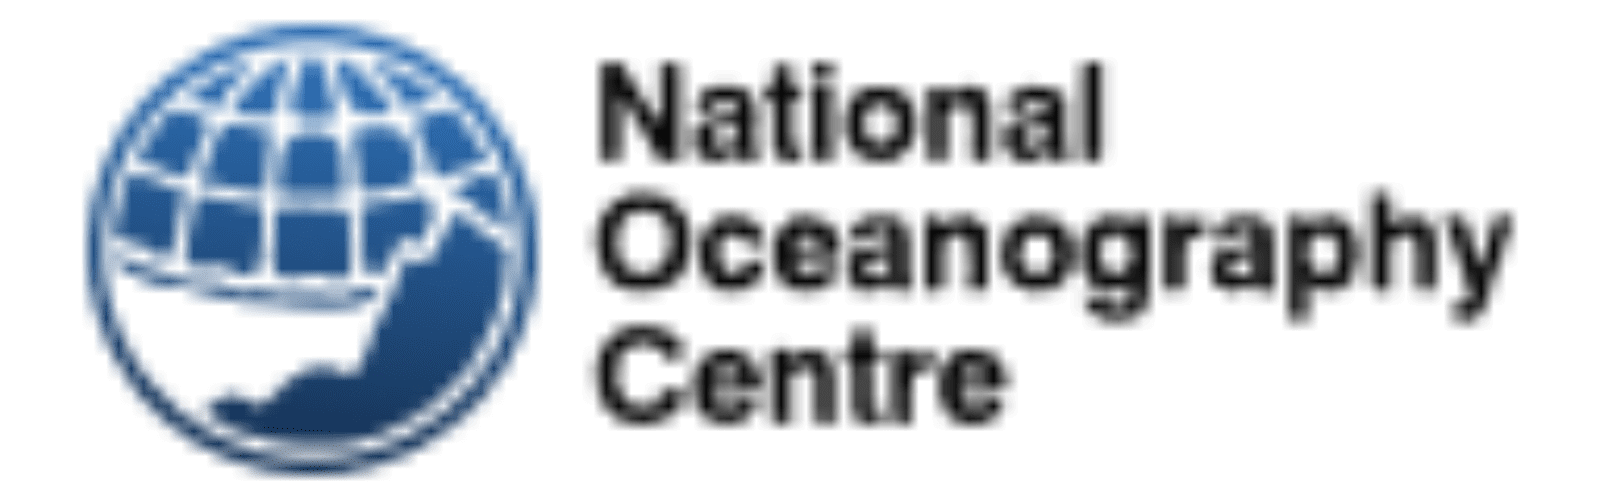 the-national-oceanography-centre-logo-1